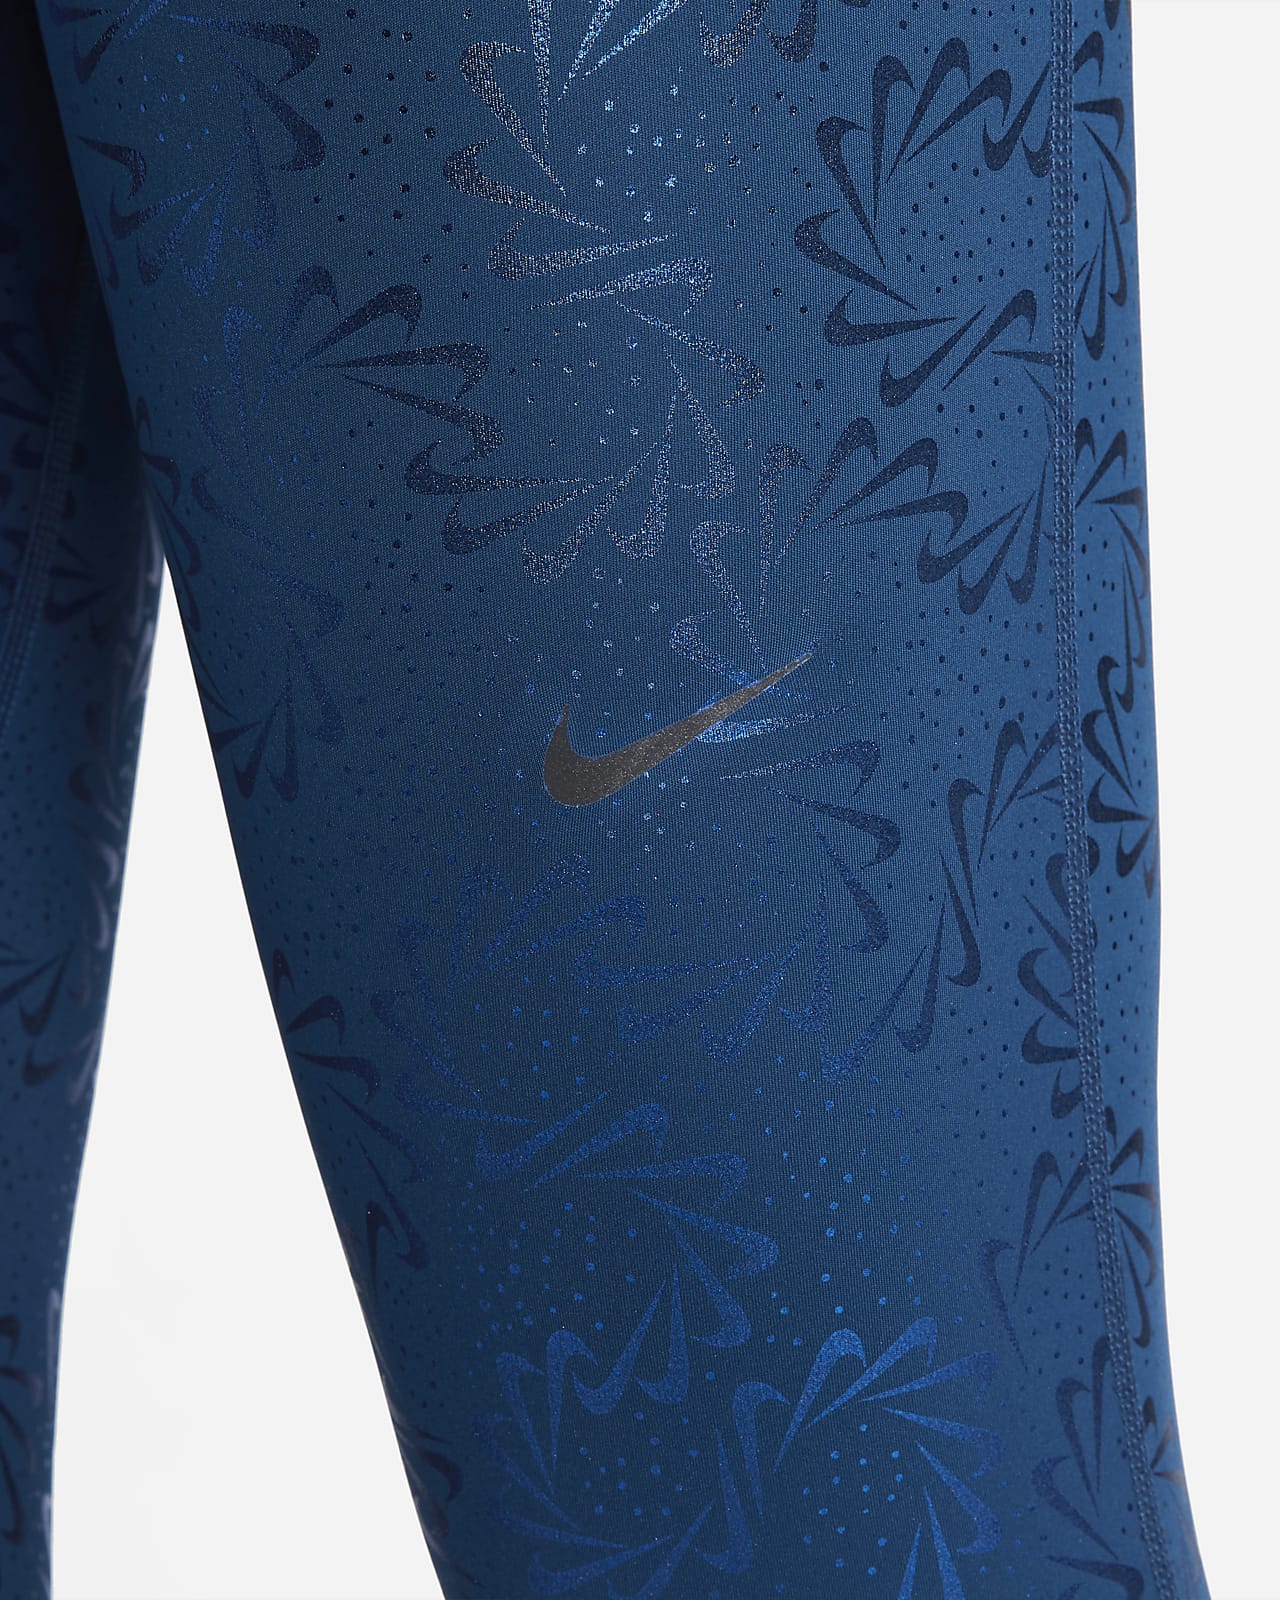 Nike Dri-FIT One Women s Mid-Rise Allover Print Leggings